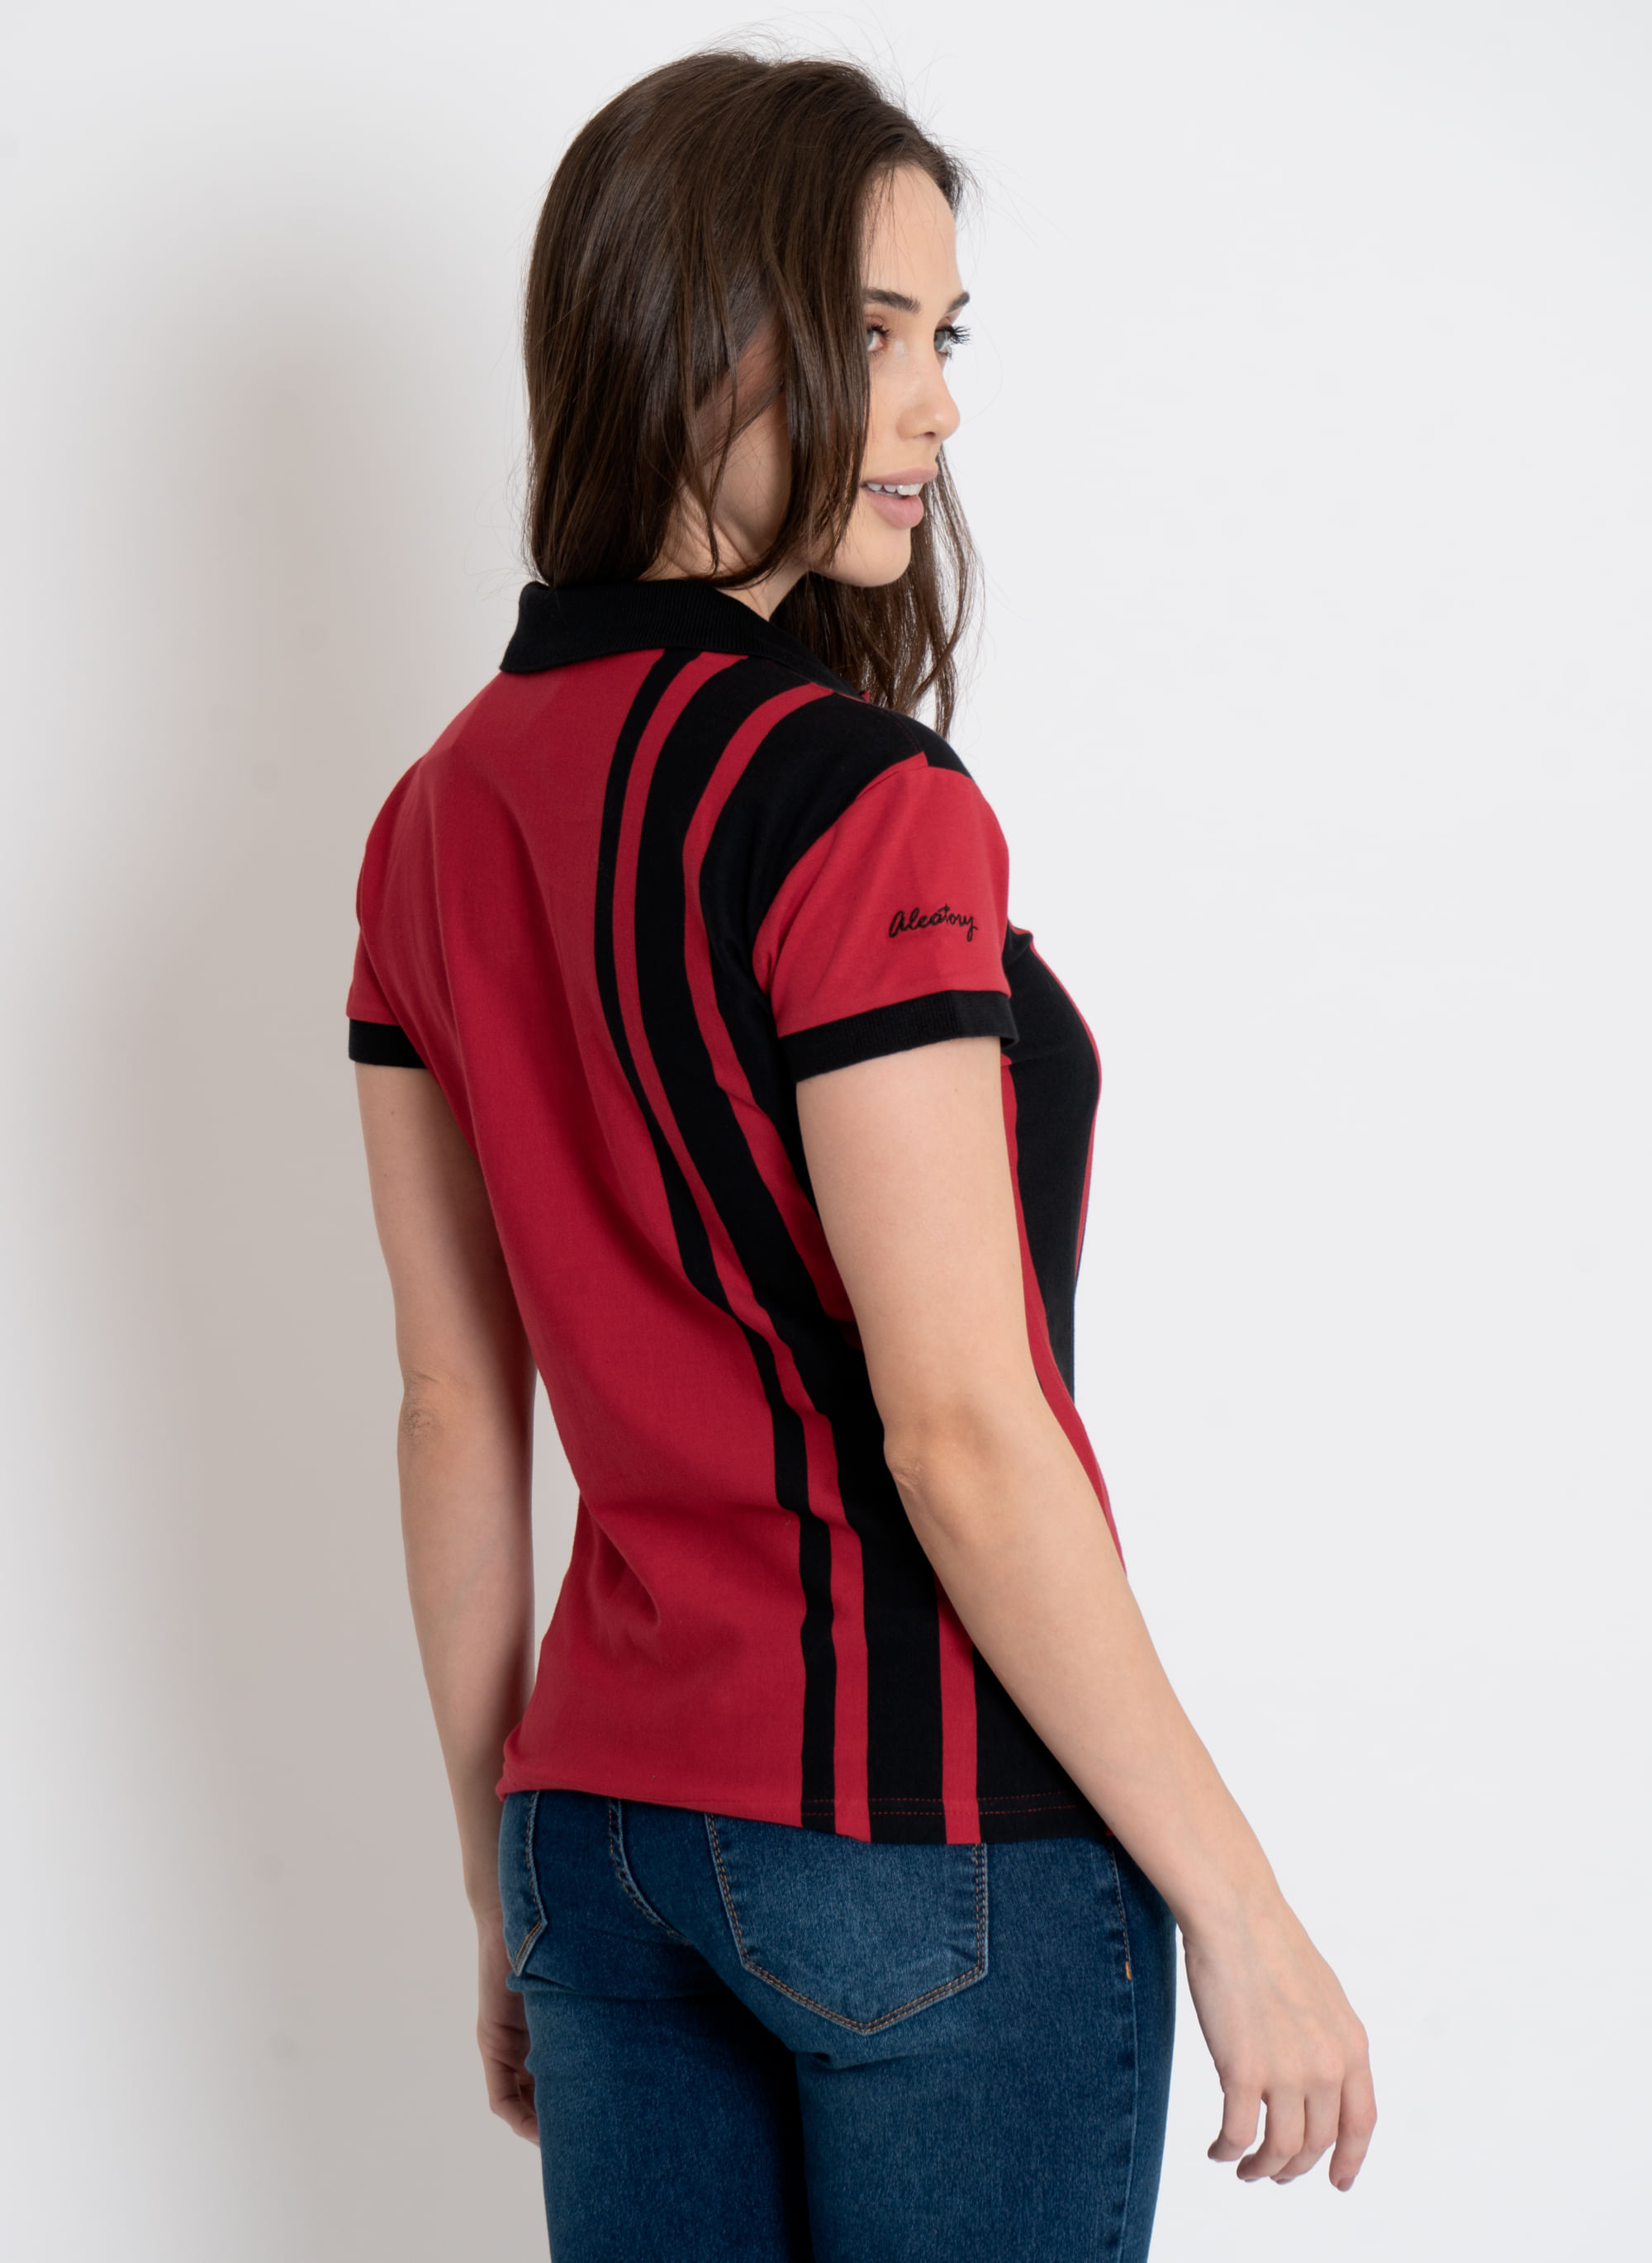 Camisa-Polo-Feminina-Aleatory-Prime-Vermelha-Vermelho-P